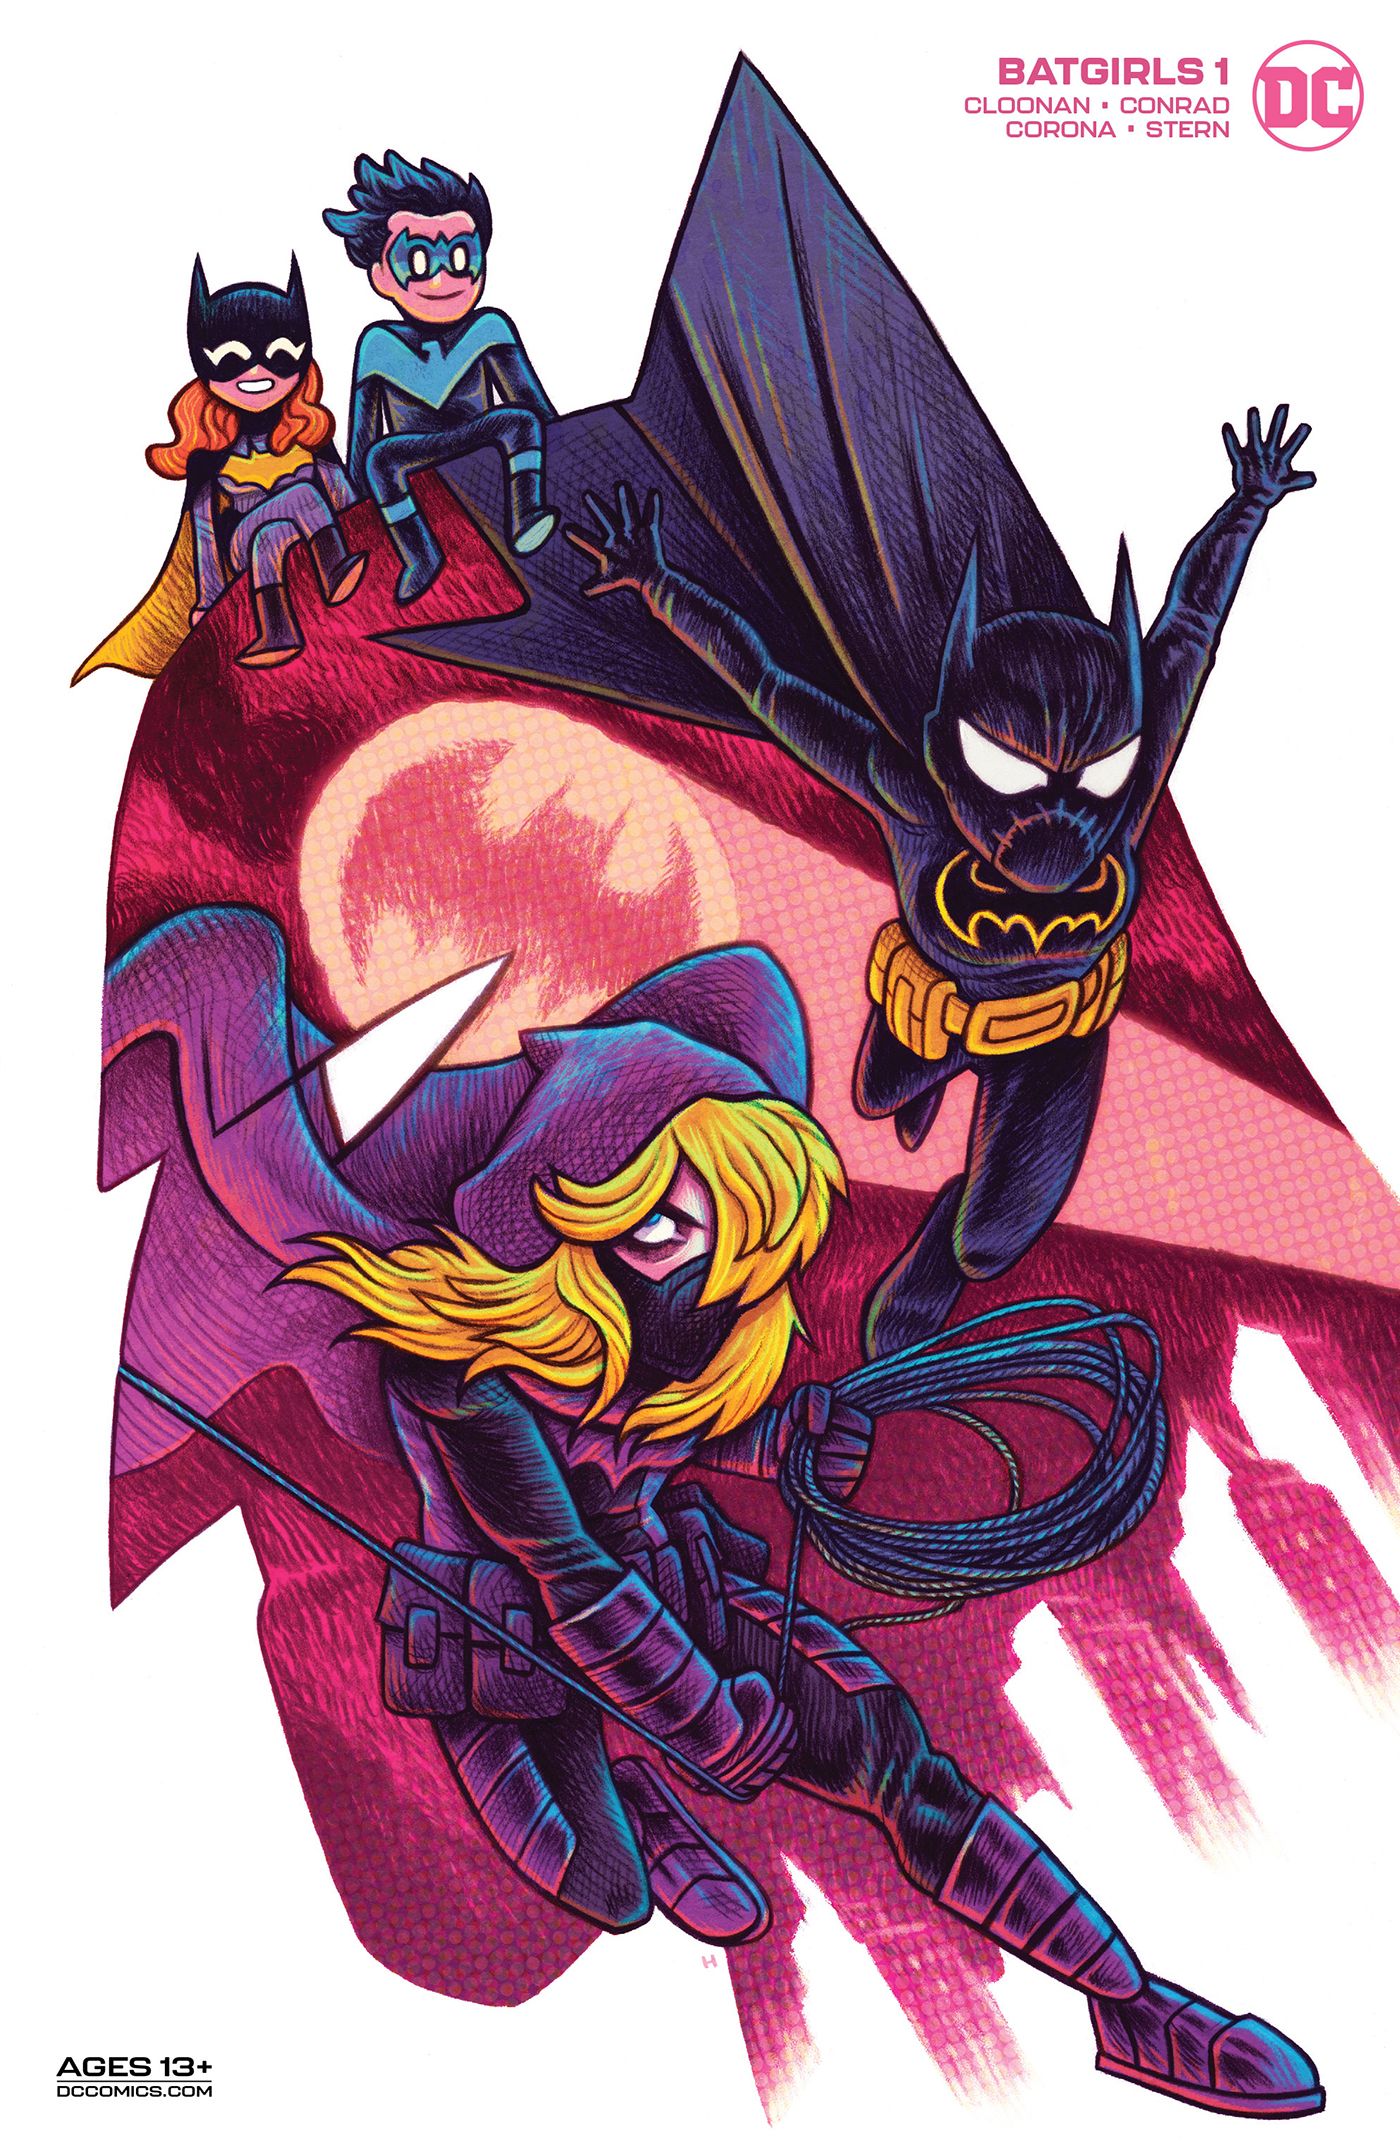 Cartoon-like cover art for Batgirls #1 features Barbara Gordon's Batgirl and Dick Grayson's Nightwing.